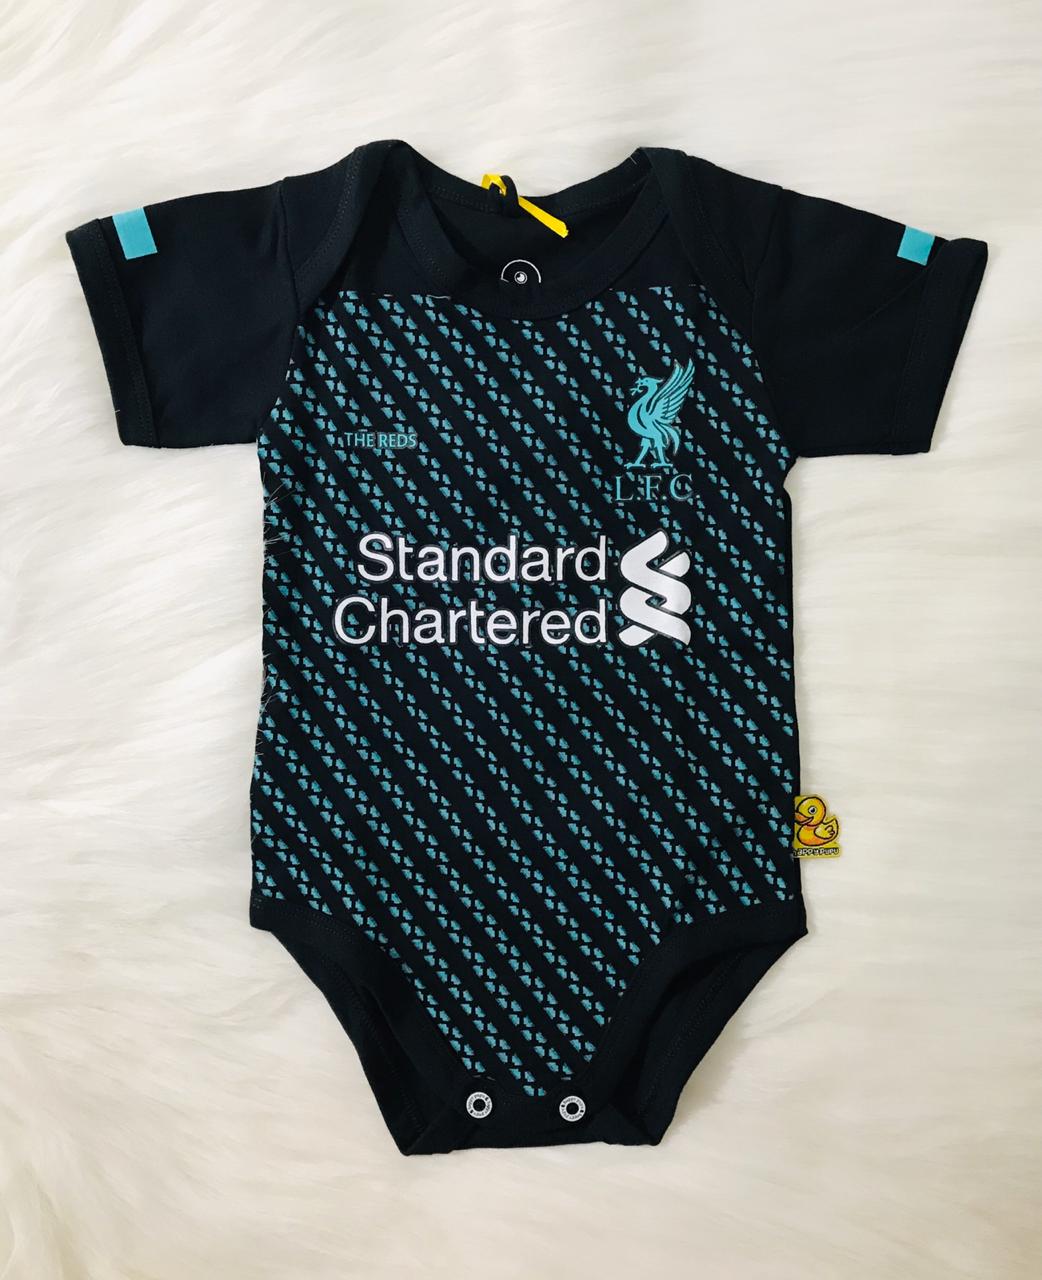 baby-fair Melomoo Baby Football Jumper Liverpool Third Clothing Set